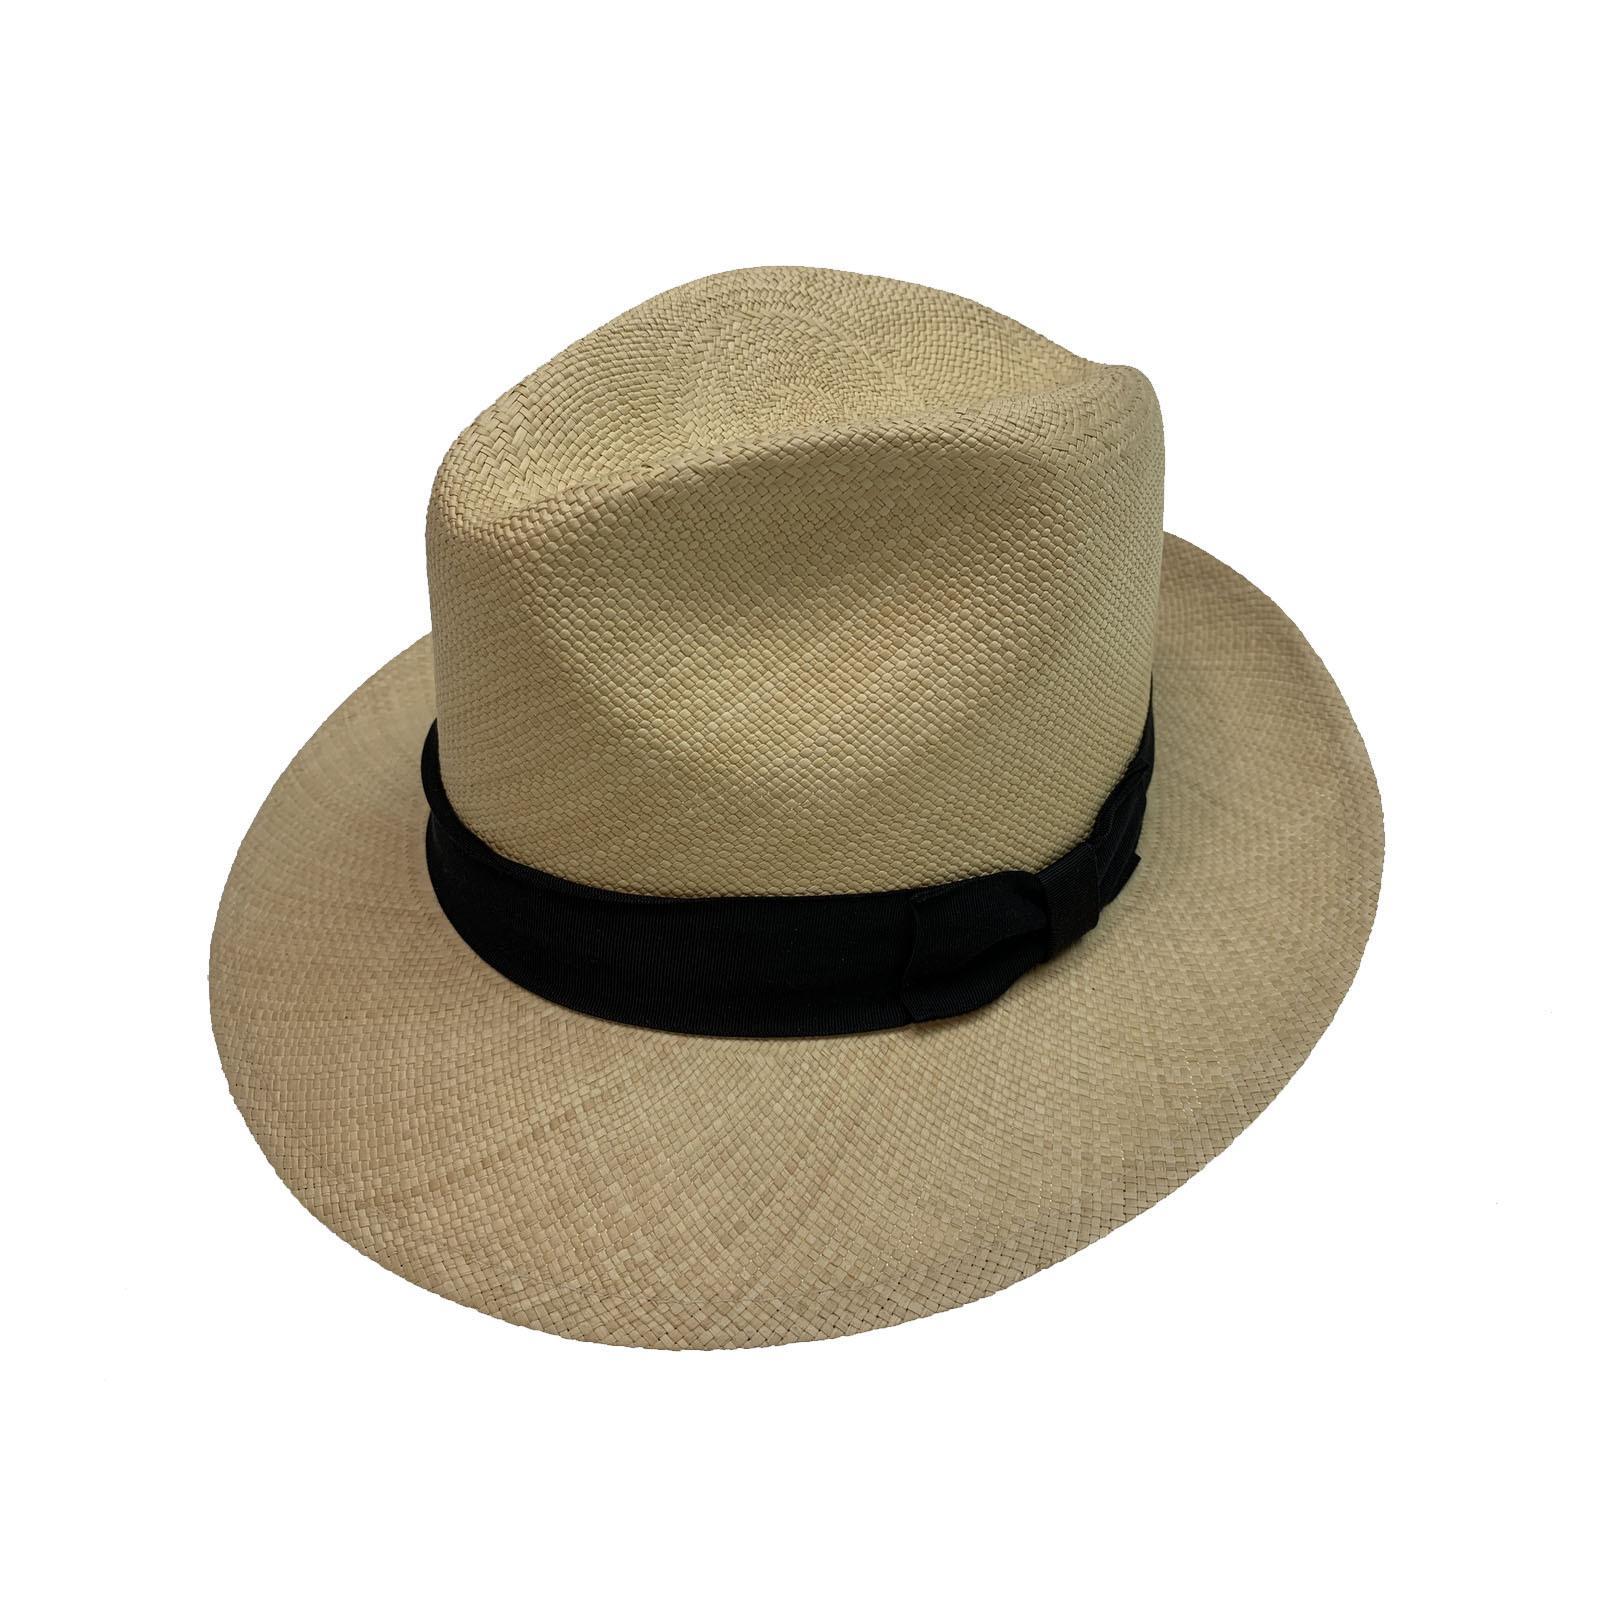 Ecuadorian Mens Straw Hat Straw MADE IN USA Fine Genuine Panama - Medium (7 - 7 1/8")